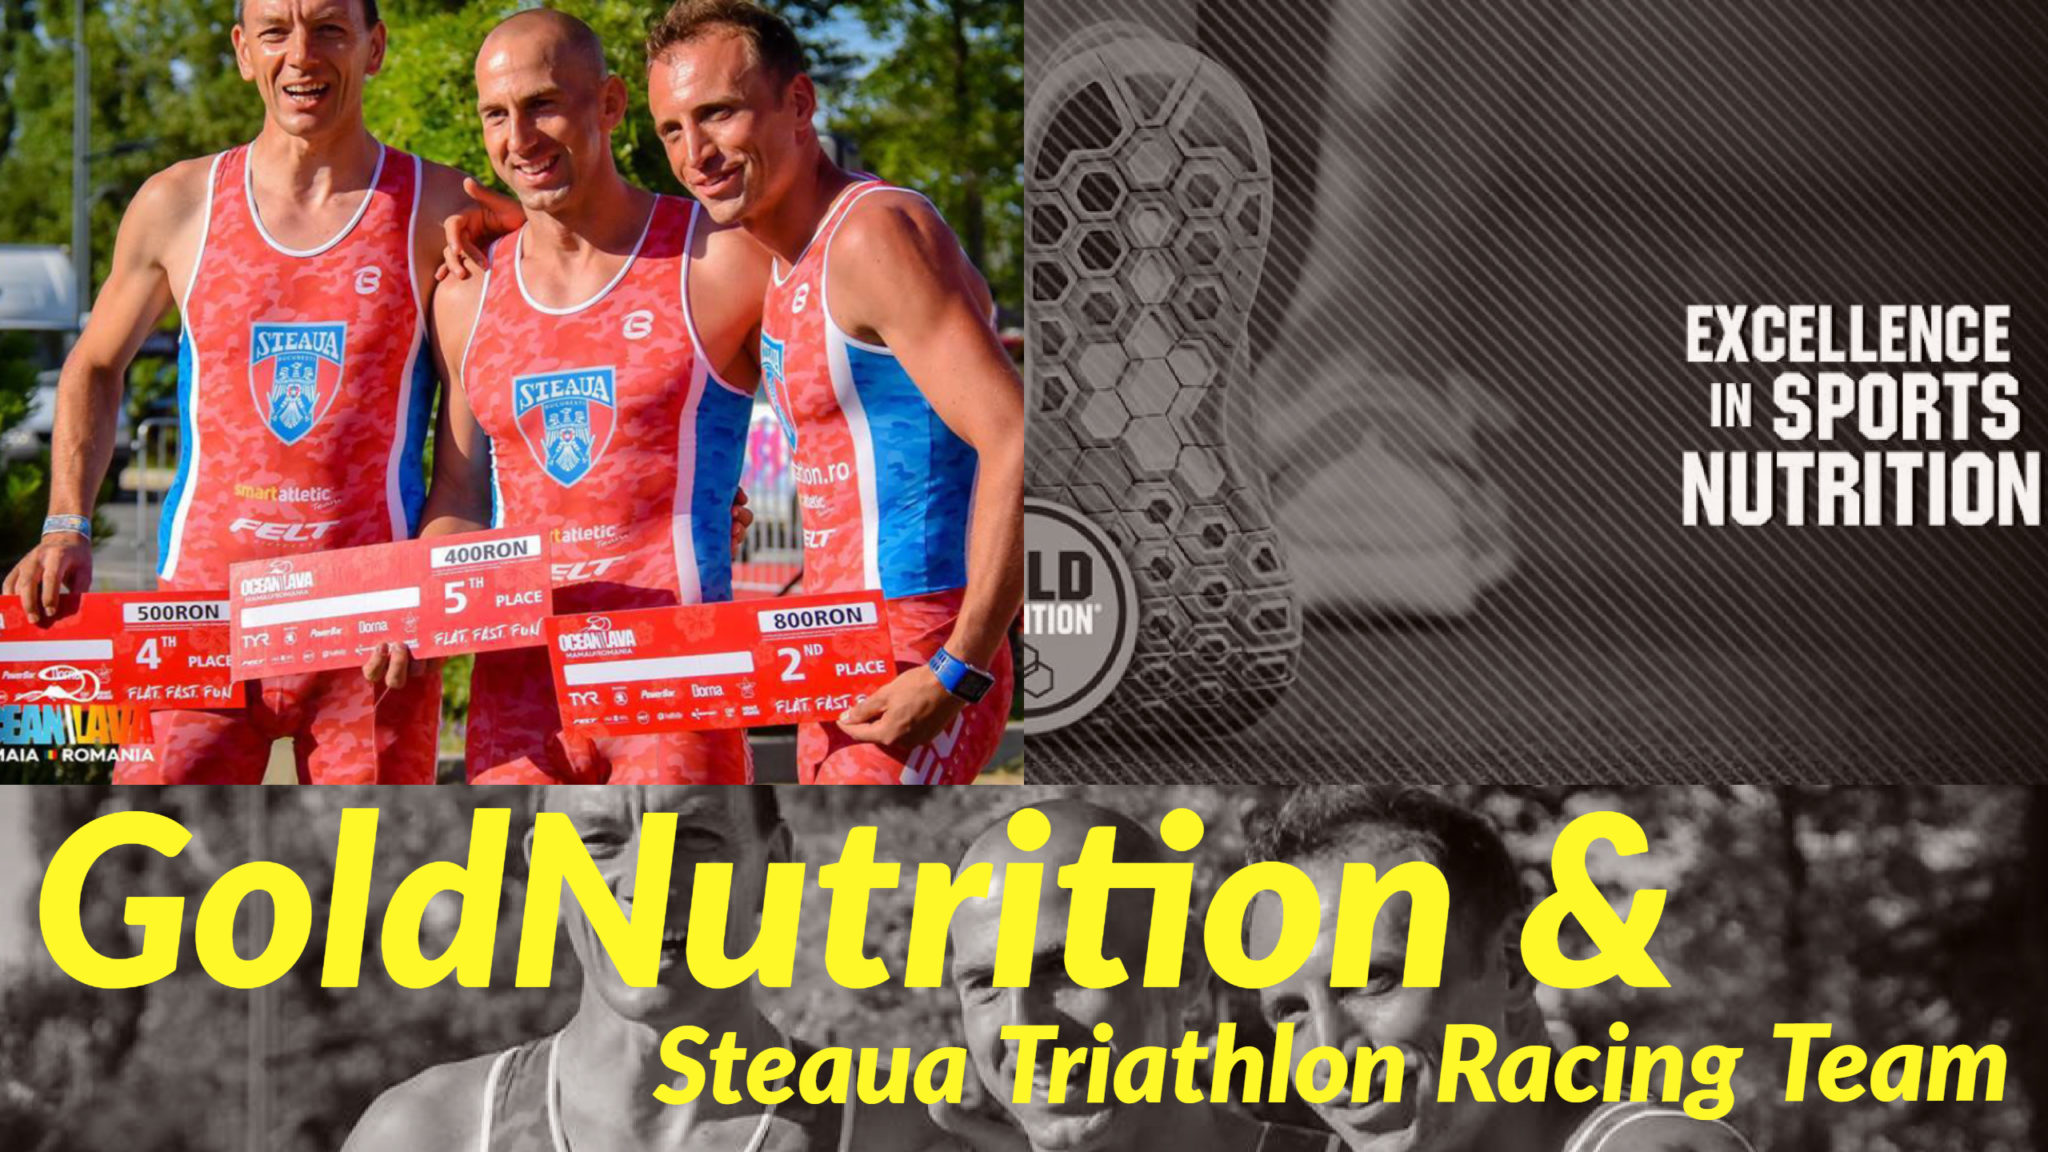 GoldNutrition sponsor Steaua Triathlon Racing Team